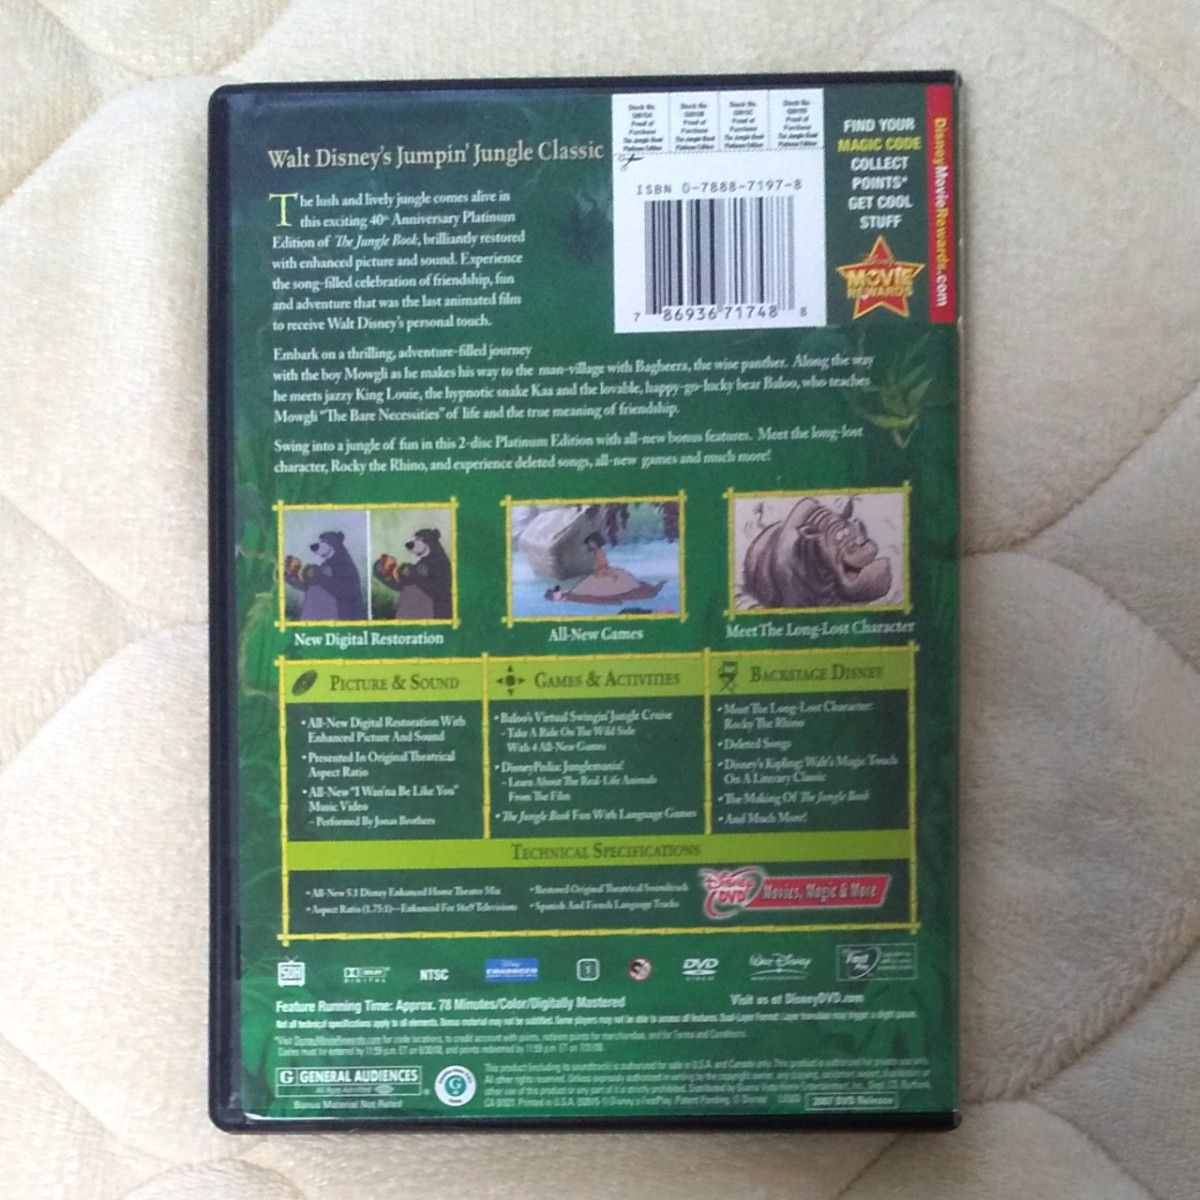 US版「The Jungle Book」40th Anniversary Platinum Edition 2-disc DVD